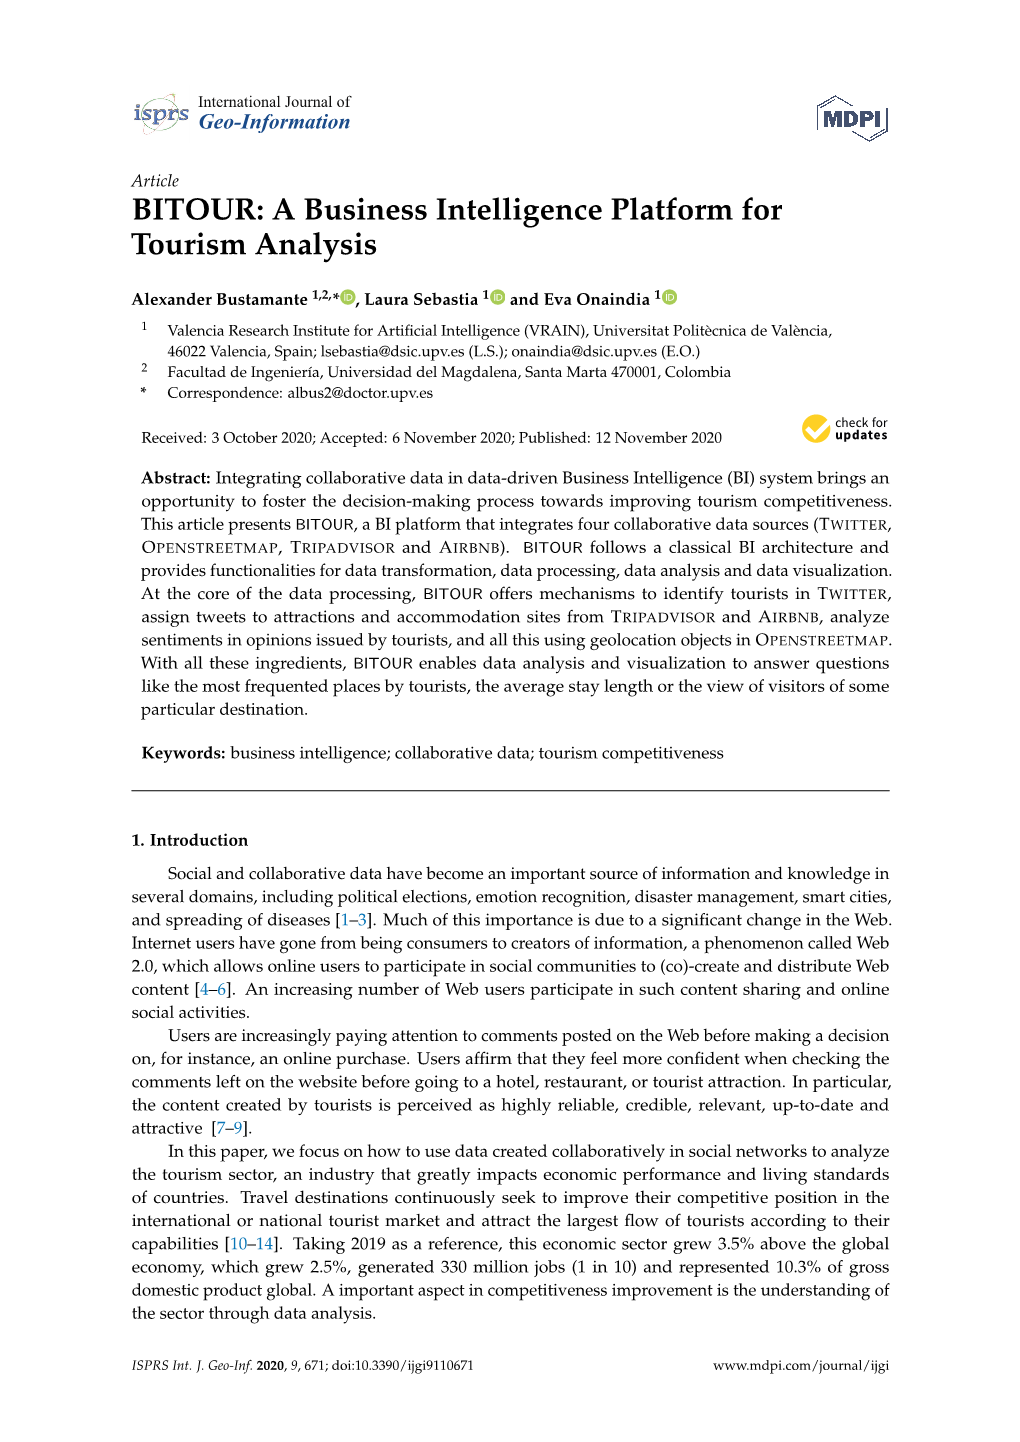 BITOUR: a Business Intelligence Platform for Tourism Analysis